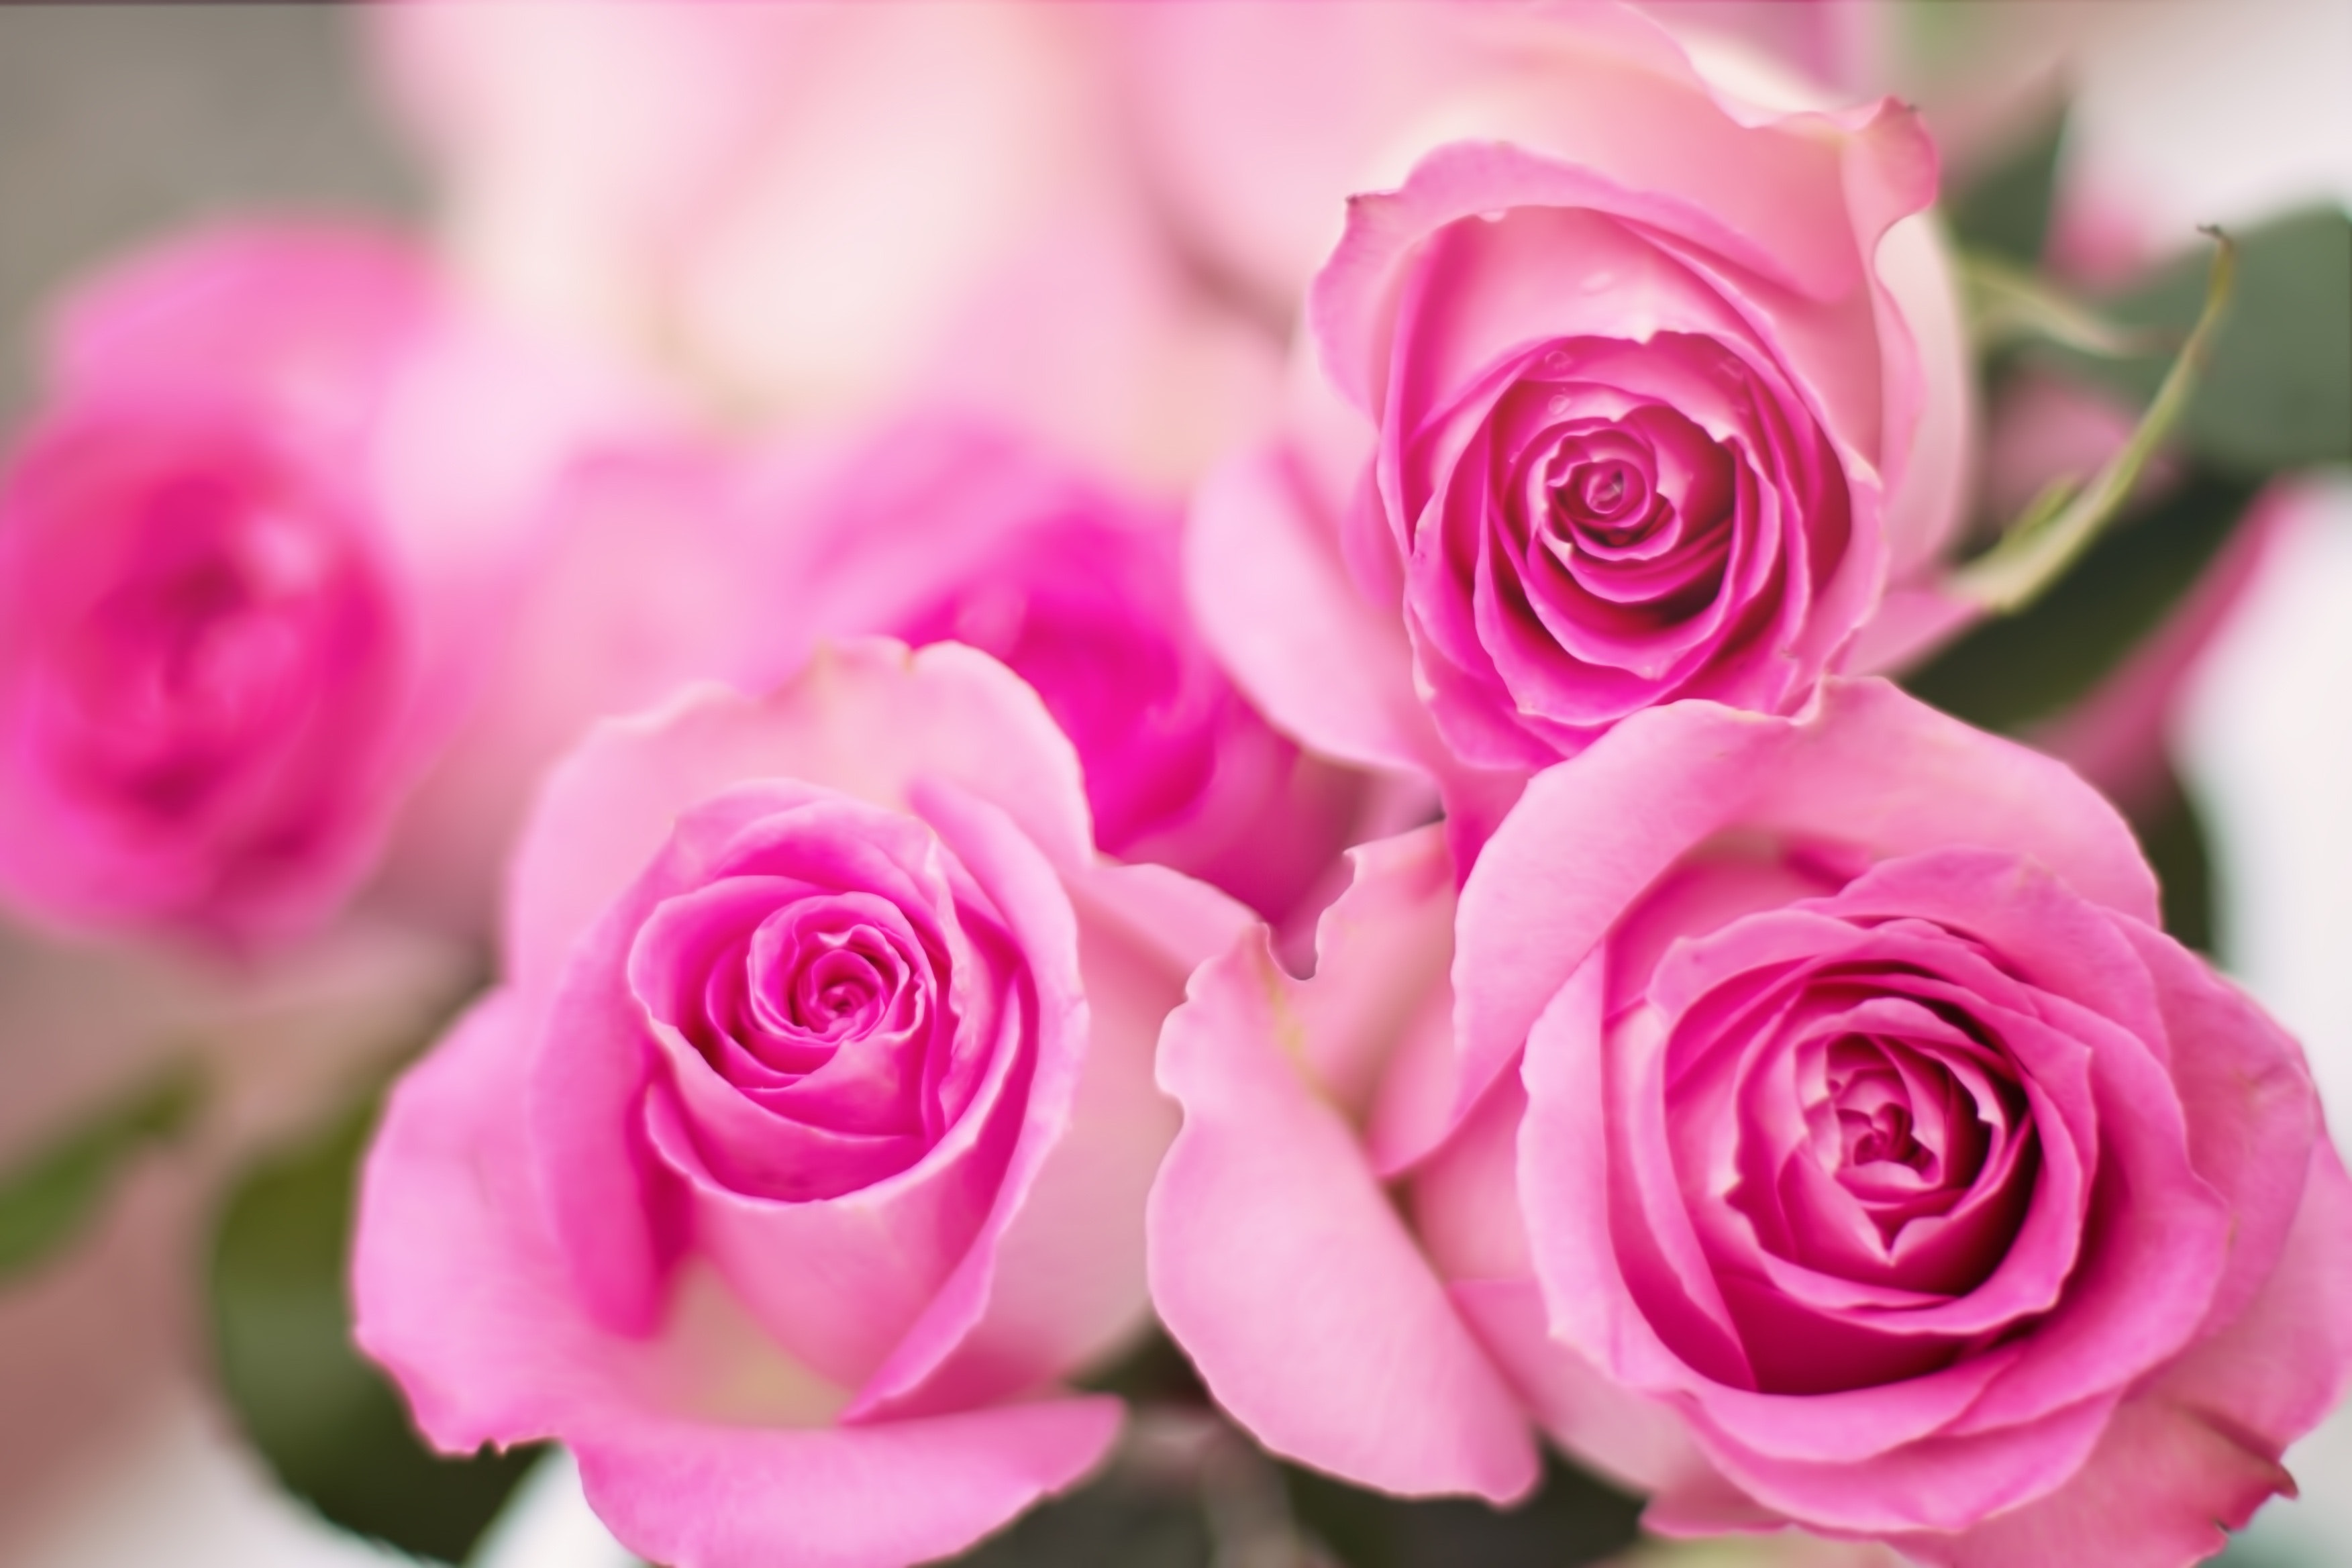 1000+ Engaging Pink Roses Photos · Pexels · Free Stock Photos